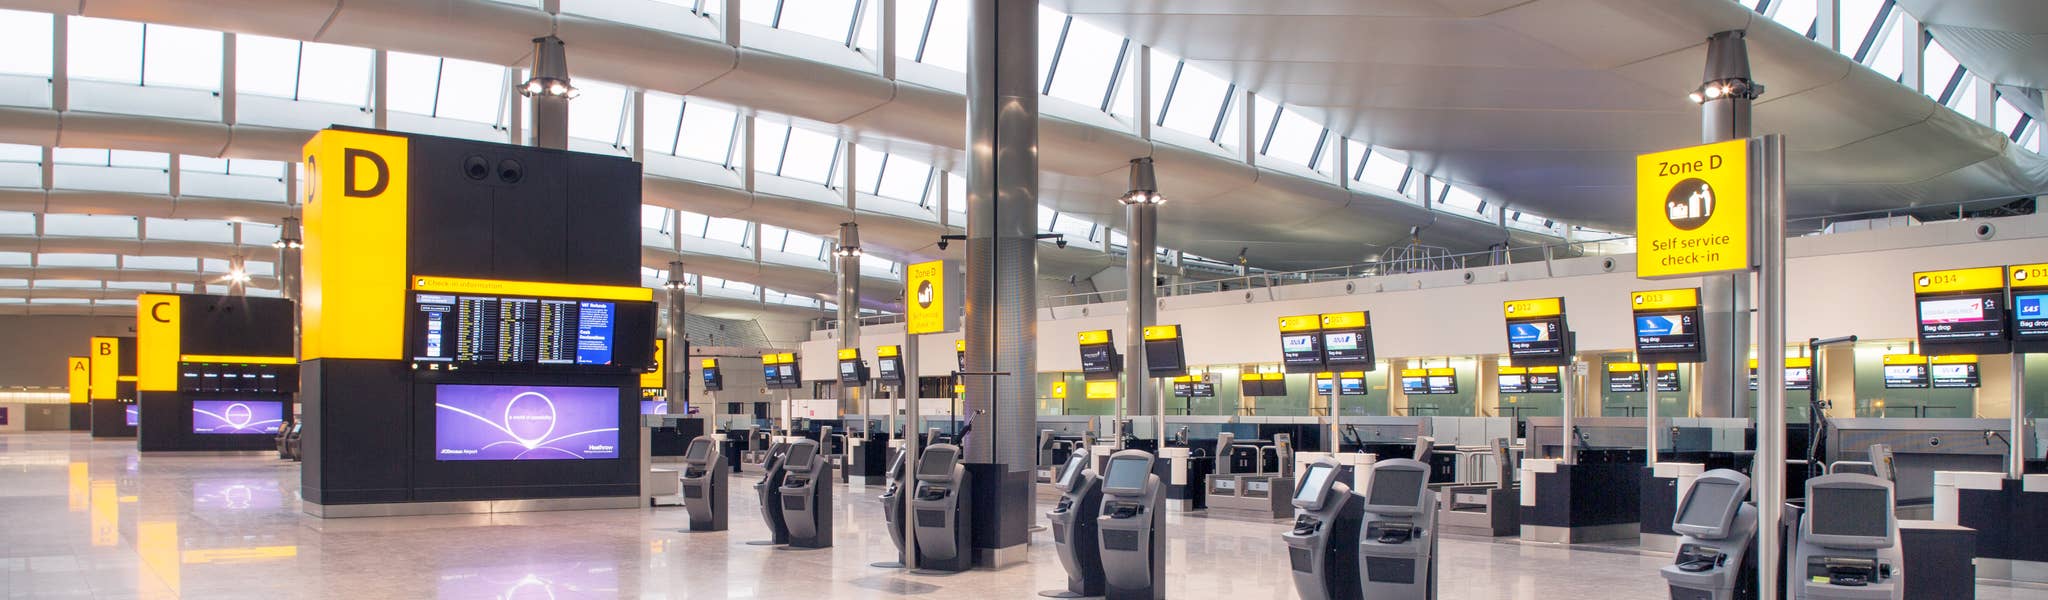 Heathrow Airport Terminal 2 Aer Lingus